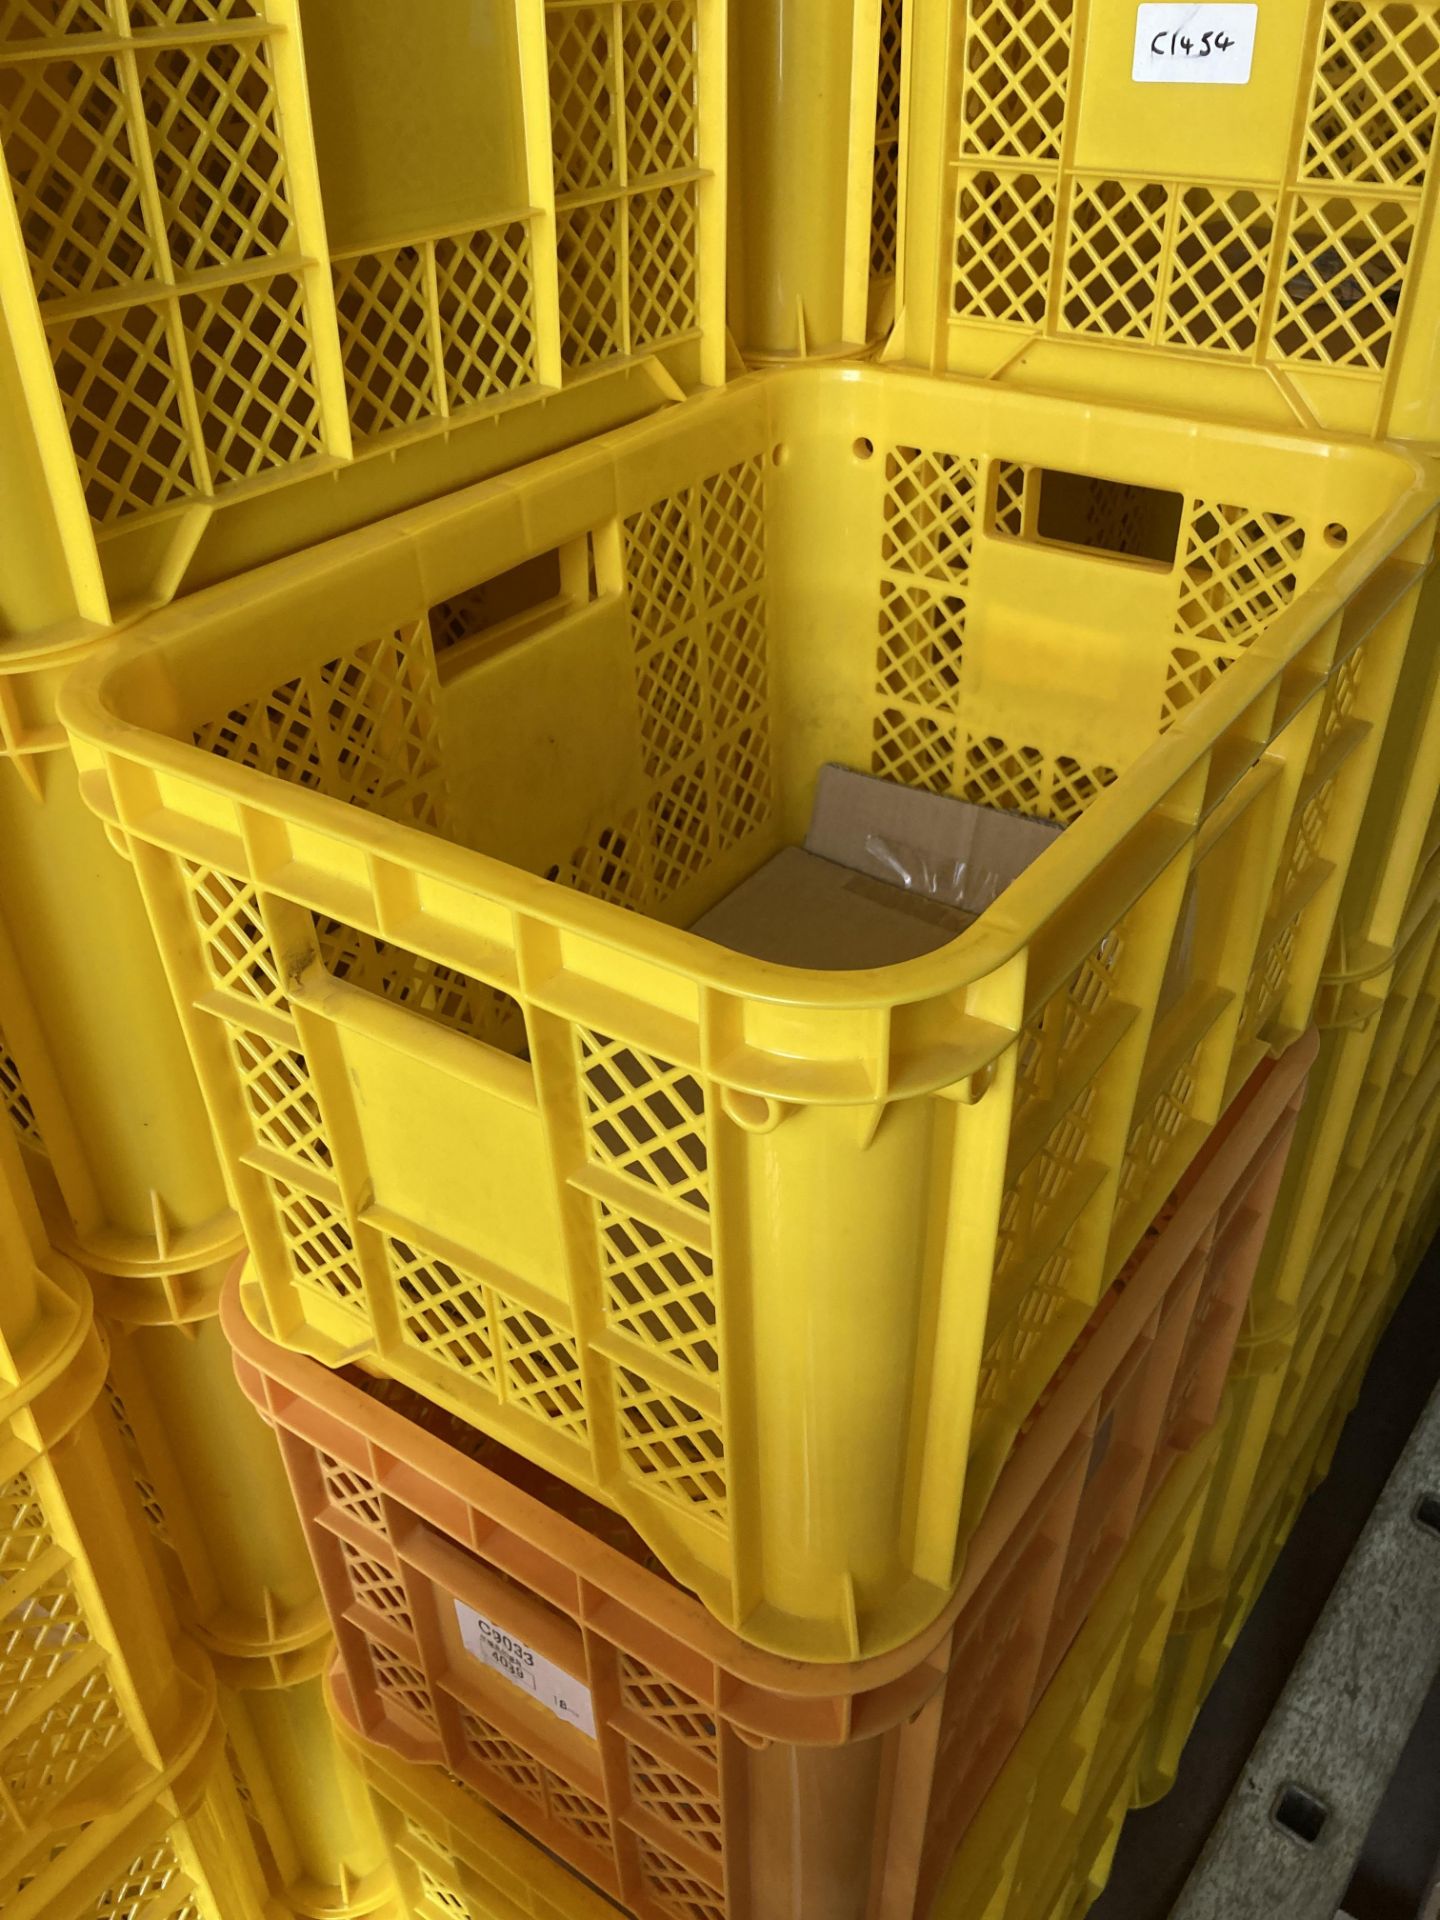 10 x yellow plastic crates each 52 x 36 x 30cm deep